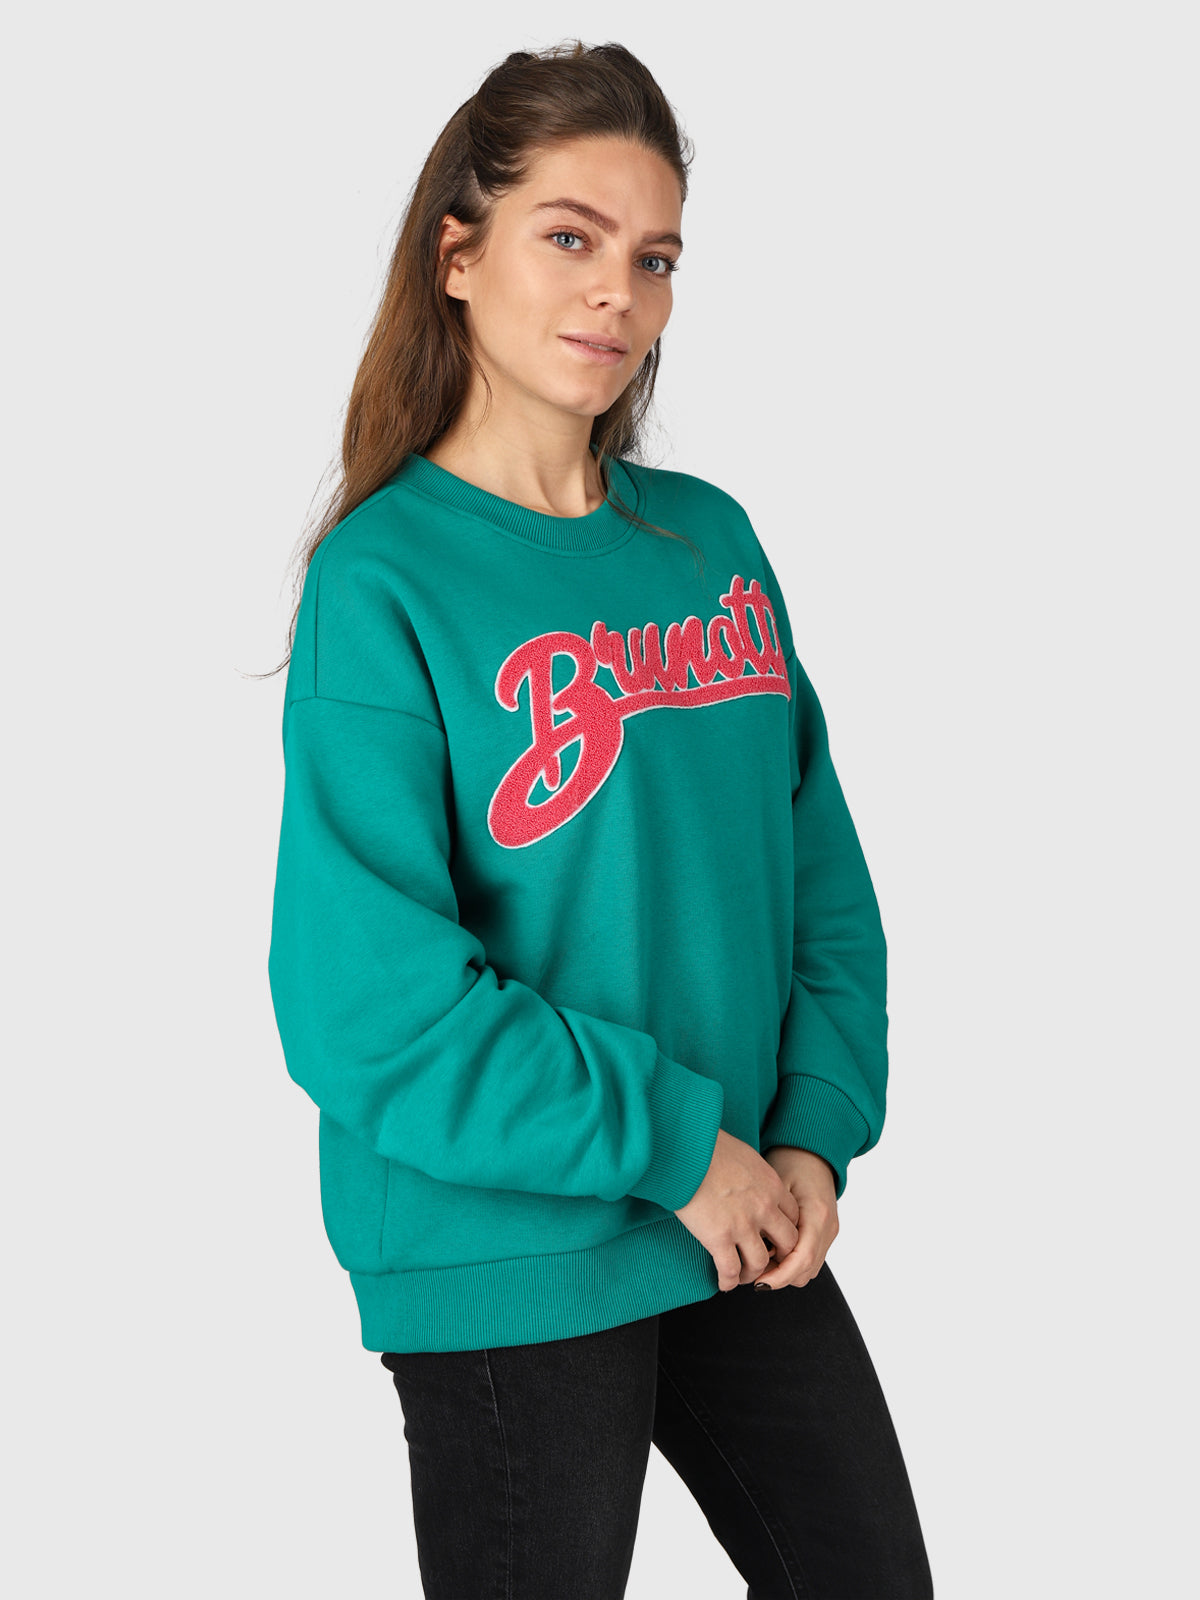 Arini-R Damen Sweatshirt | Grün